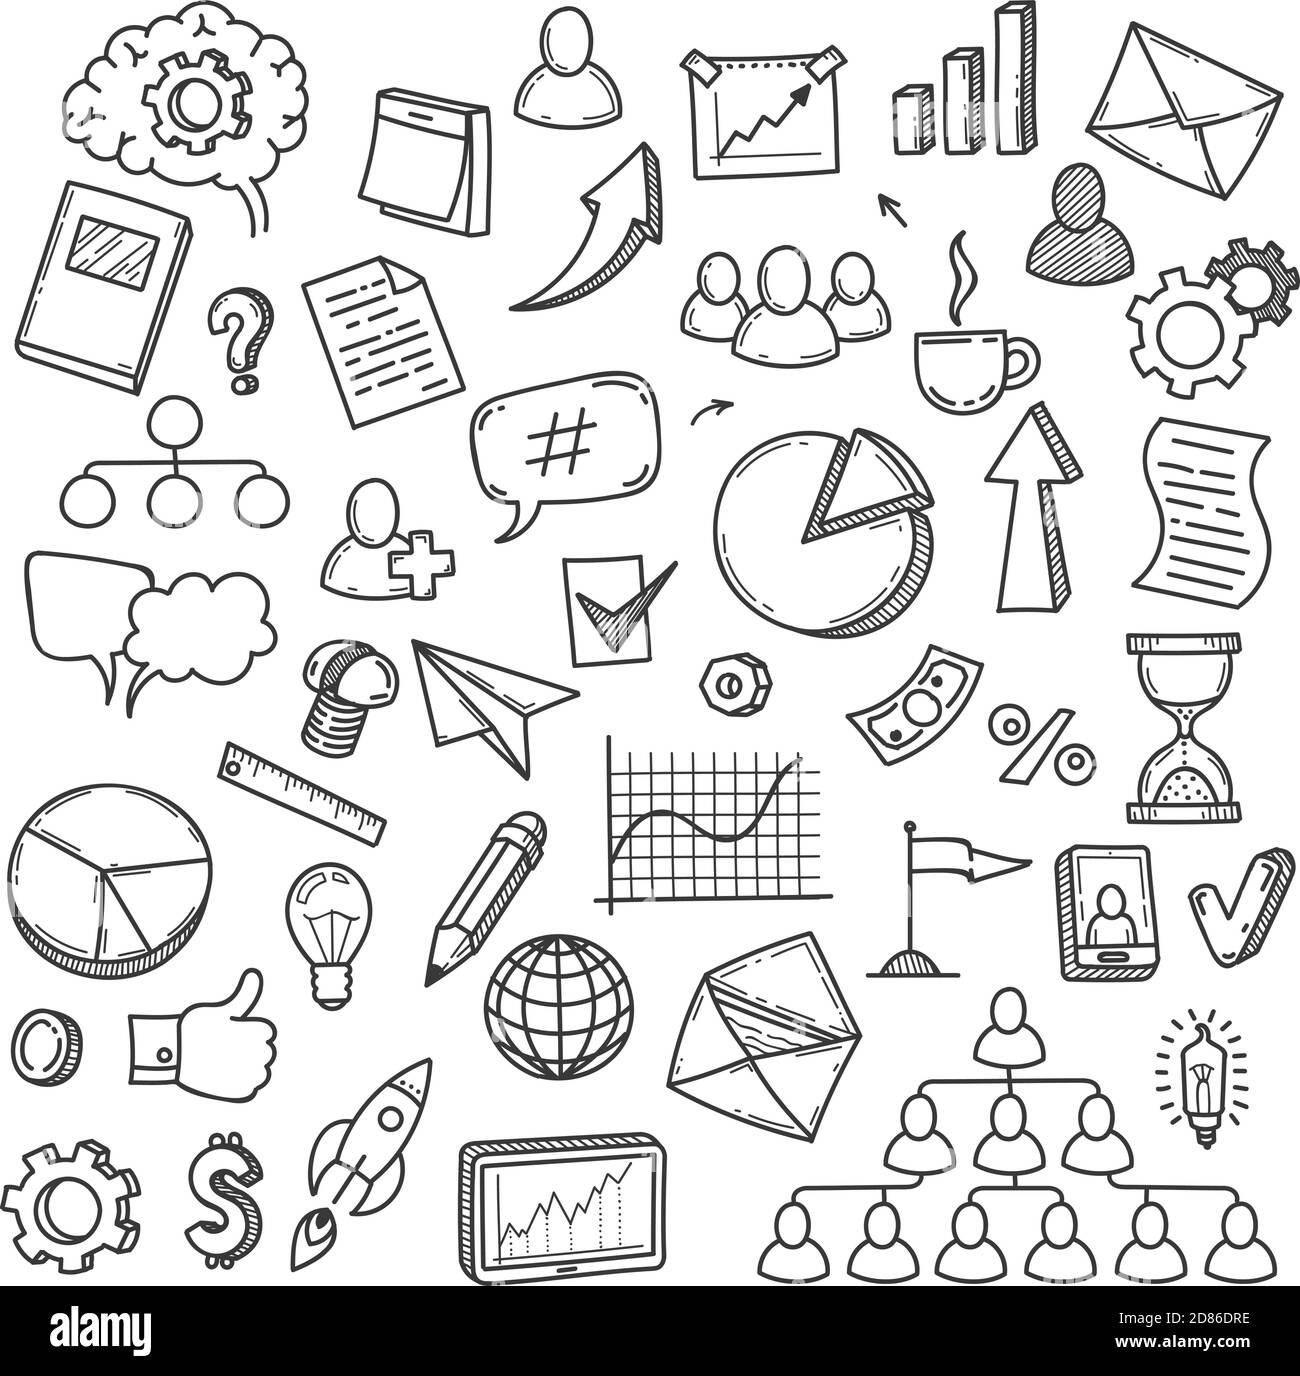 Doodle-Start. Skizze Smart Idee Konzept mit Glühbirne, digitale Innovation Unternehmen und Icons, Lehre Business-Marketing, Vektor-Set Stock Vektor